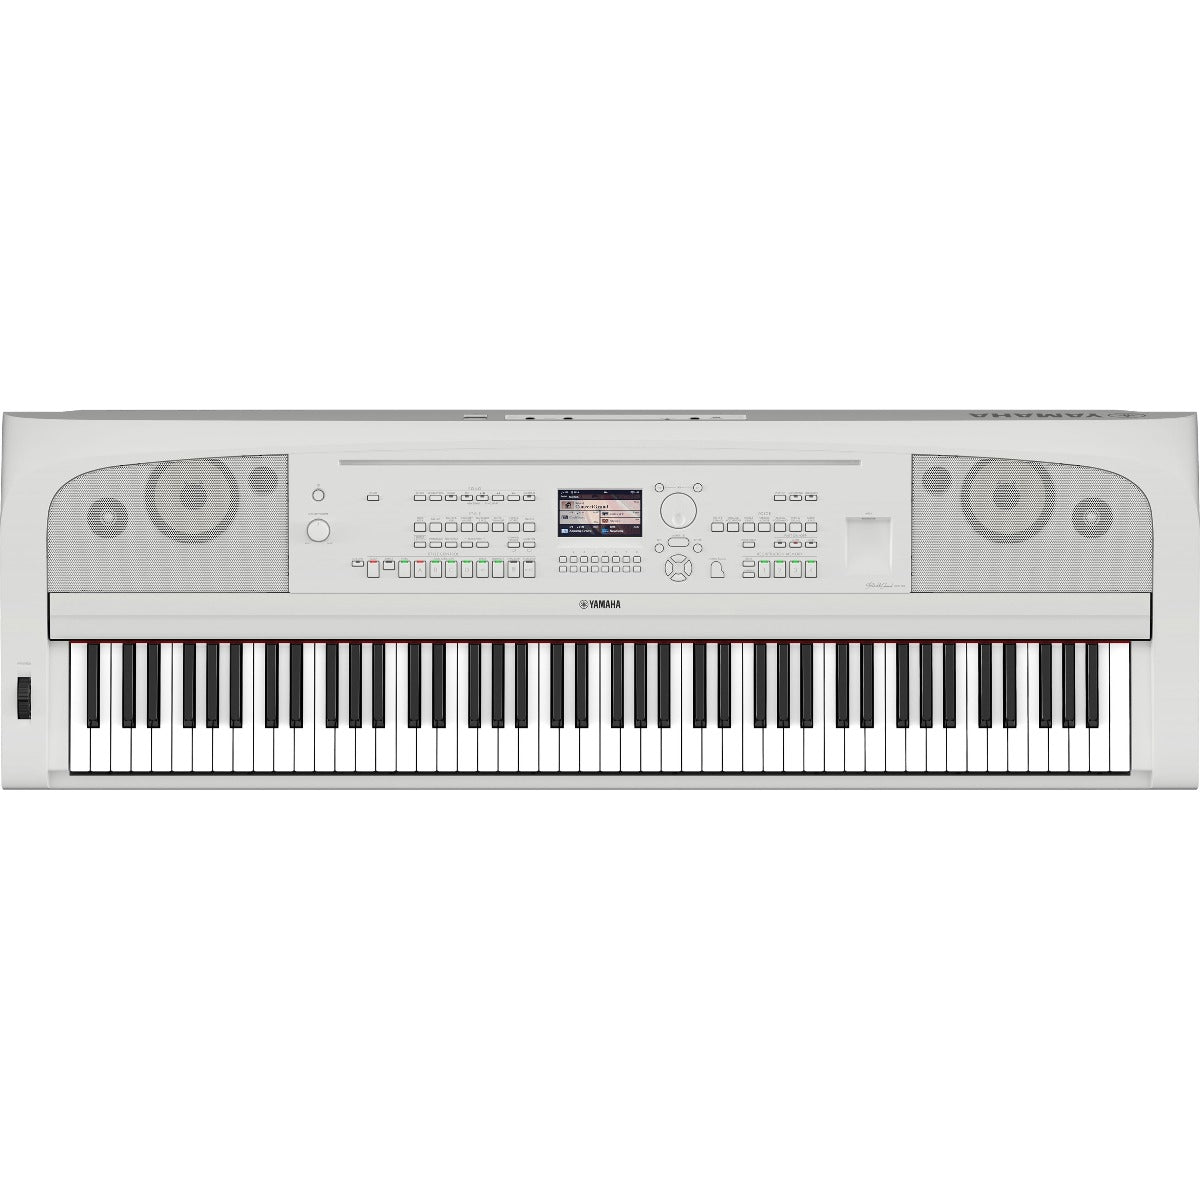 Top view of Yamaha DGX-670 Portable Grand Digital Piano - White